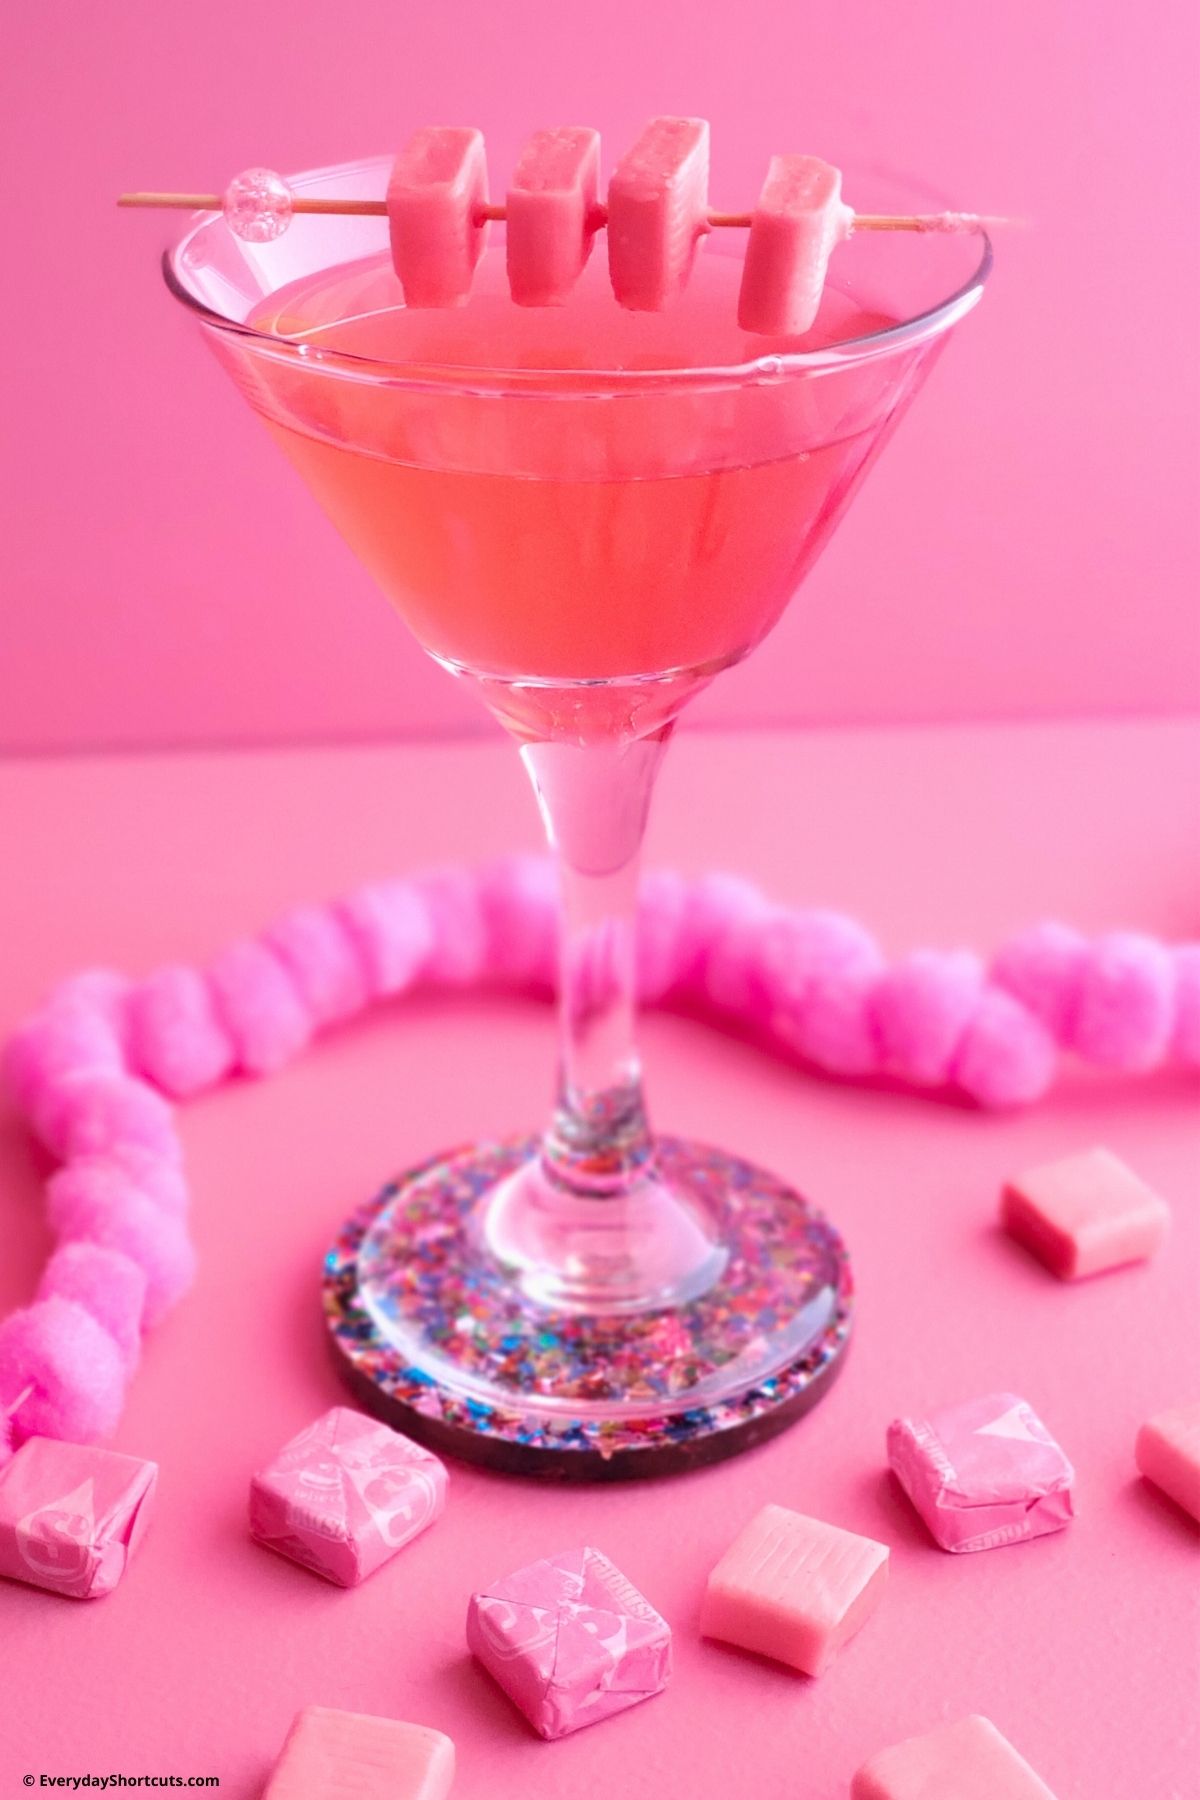 Starburst martini with pink starburst candy garnish